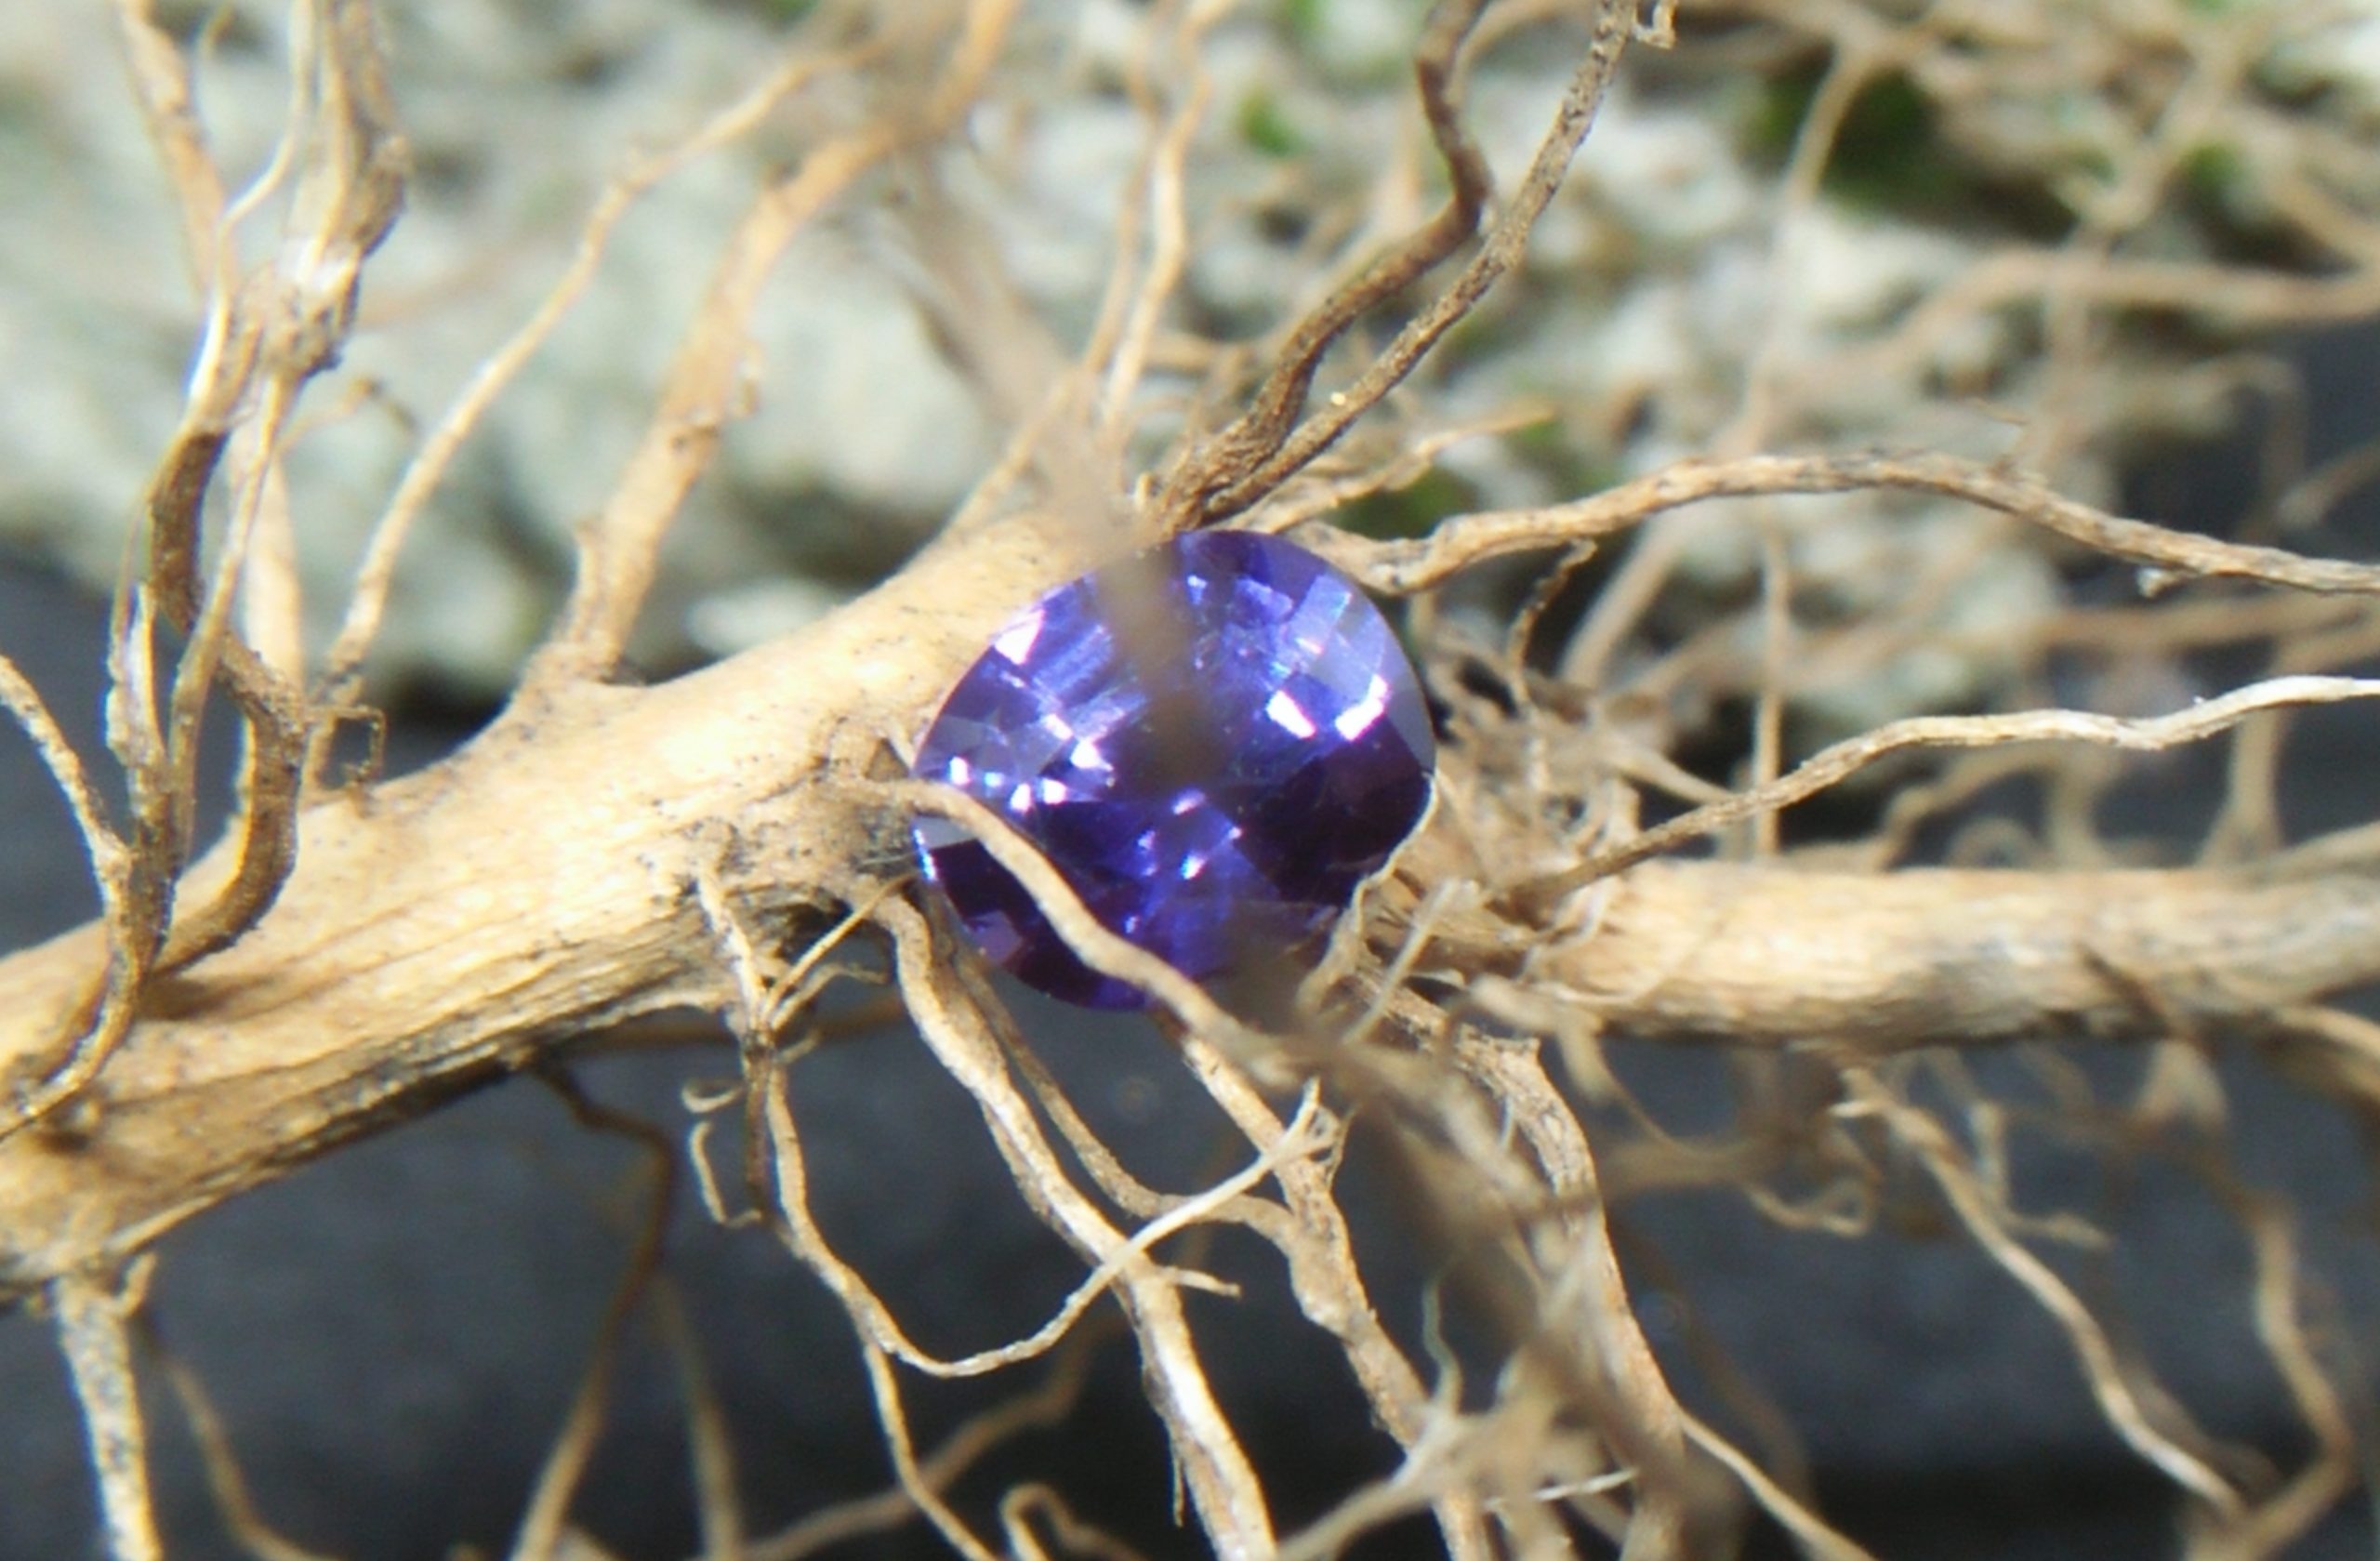 Ceylon Natural Colour Change Sapphire Shape : Cushion Colour : C.C from Violet to Purple Weight : 0.55Cts Dimension : 5.3 x 4.4 x 3.0 mm Treatment : Unheated 变色蓝宝石 重量 : 0.55卡拉   尺寸 : 5.3 x 4.4 x 3.0 mm 颜色 : 紫罗兰色，紫色 透明 : 好透明  形状 : 垫形 治療：没有加热 • CSL - Colored Stone Laboratory Certified ( GIA Alumni Association Member ) • CSL Memo No : ODCB693A4671